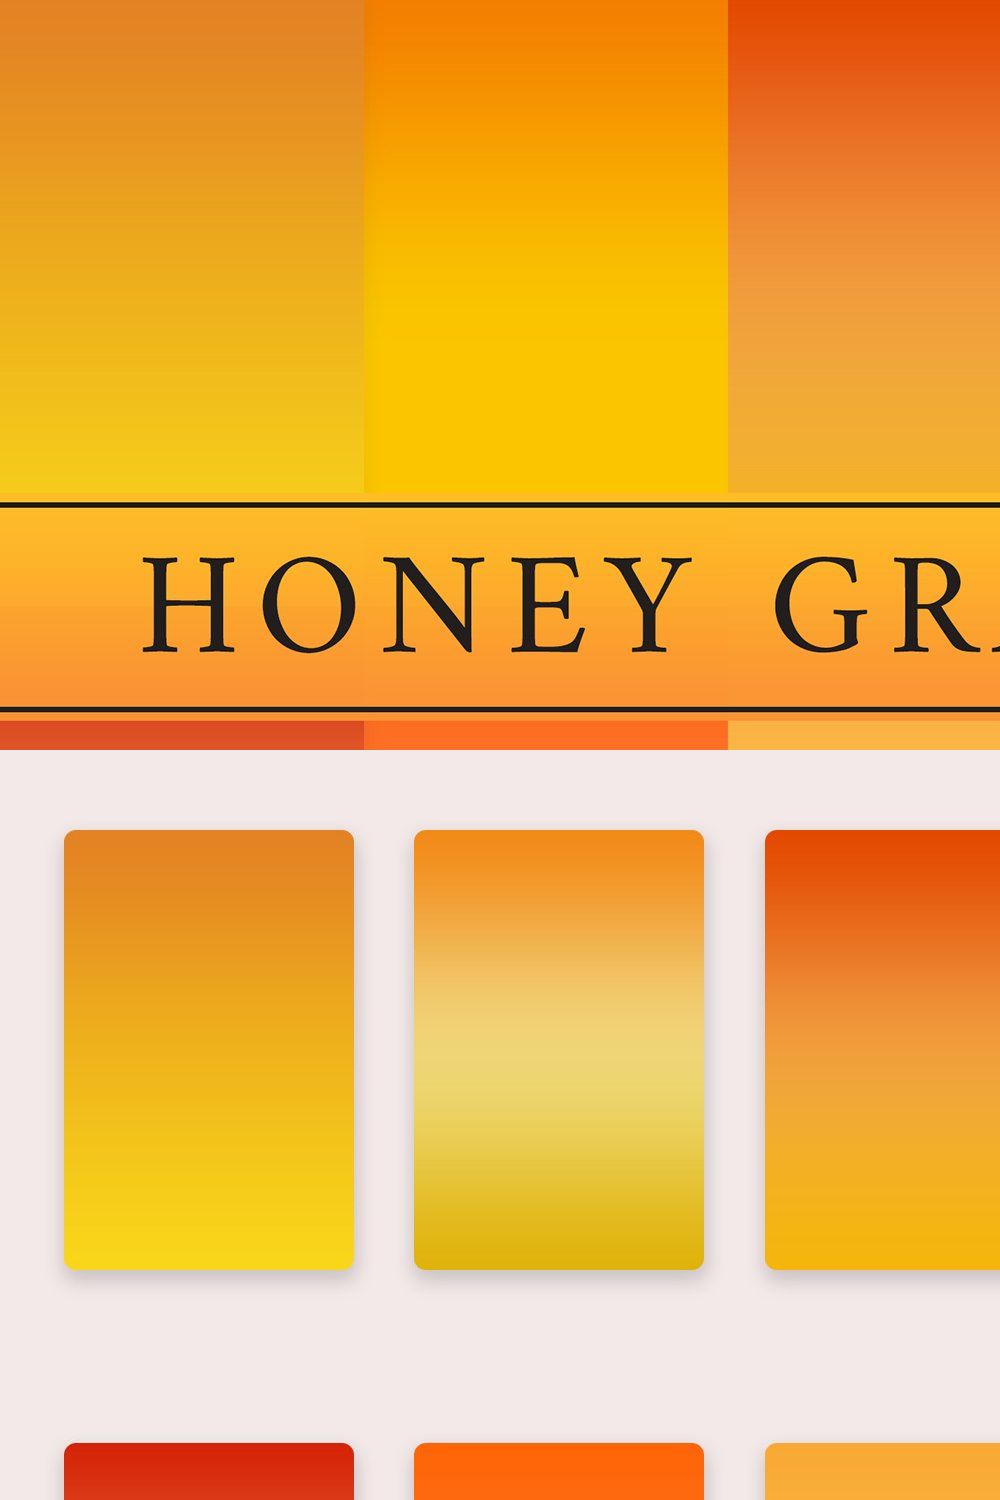 Honey Gradients pinterest preview image.